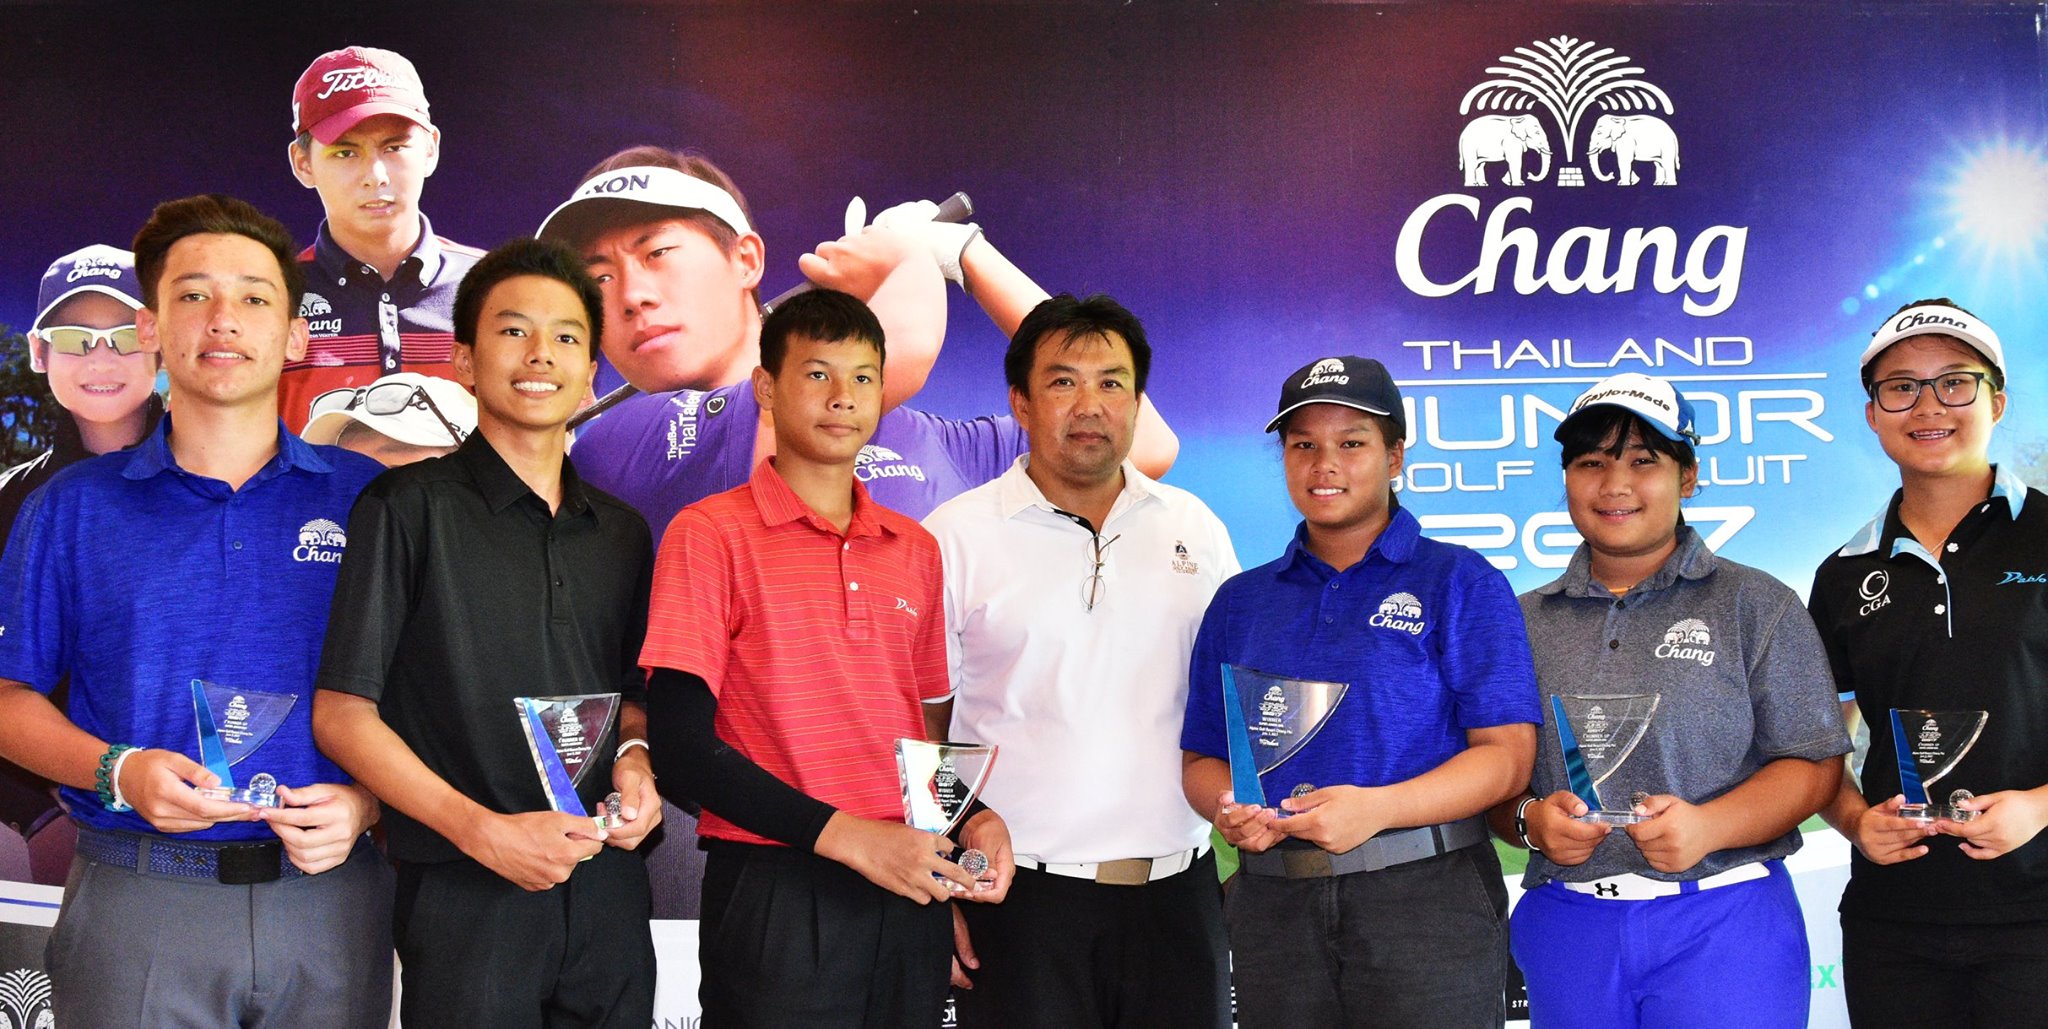 Chang Thailand Junior Golf Circuit 2017